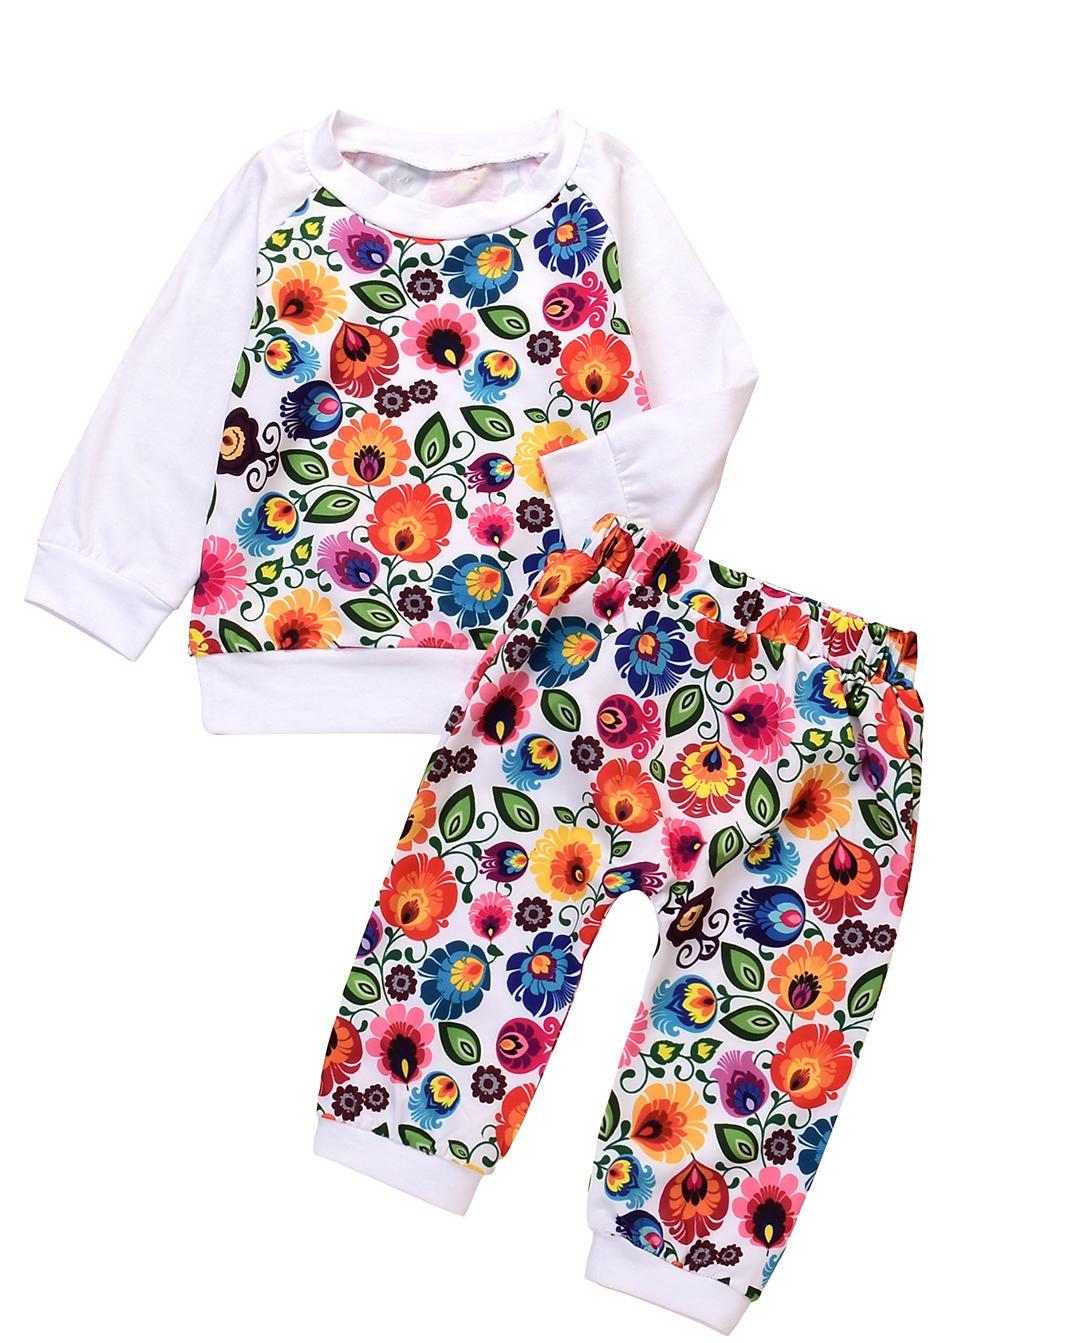 2 Pcs Baby Coloth sets Korean Style Baby Girl flower Tops and Pants Set Floral Pattern Toddler Gift Shirt + Pants Dropshipping-ebowsos